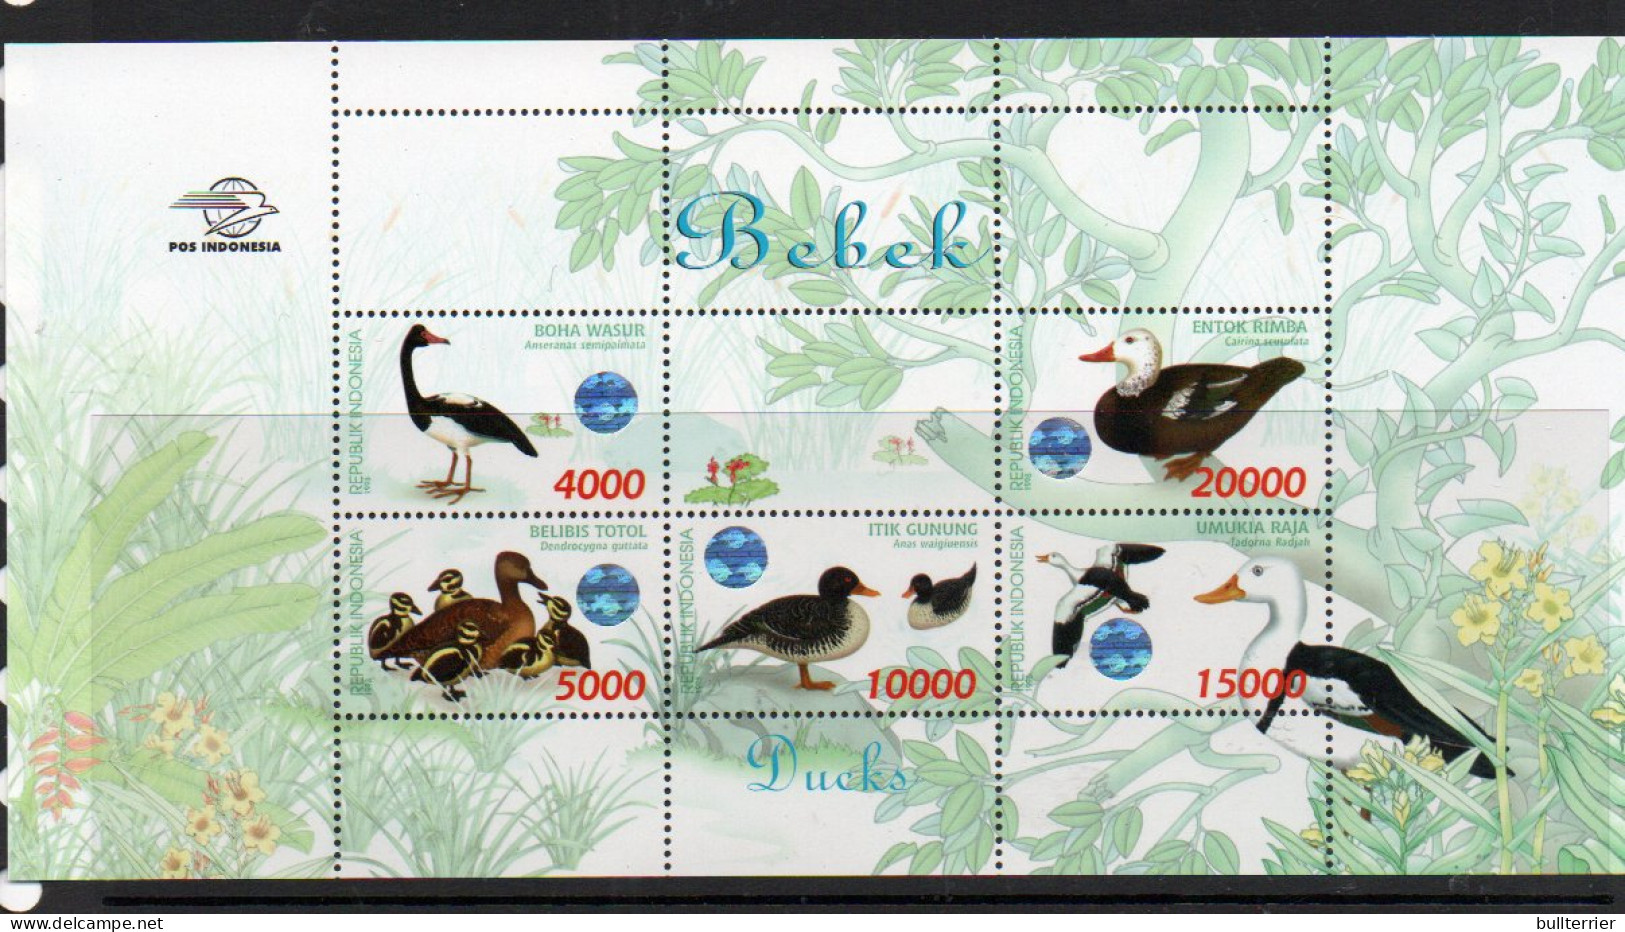 BIRDS - INDONESIA-  1998- WATERFOWL SOUVENIR SHEET  MINT NEVER HINGED,SG £30 - Columbiformes